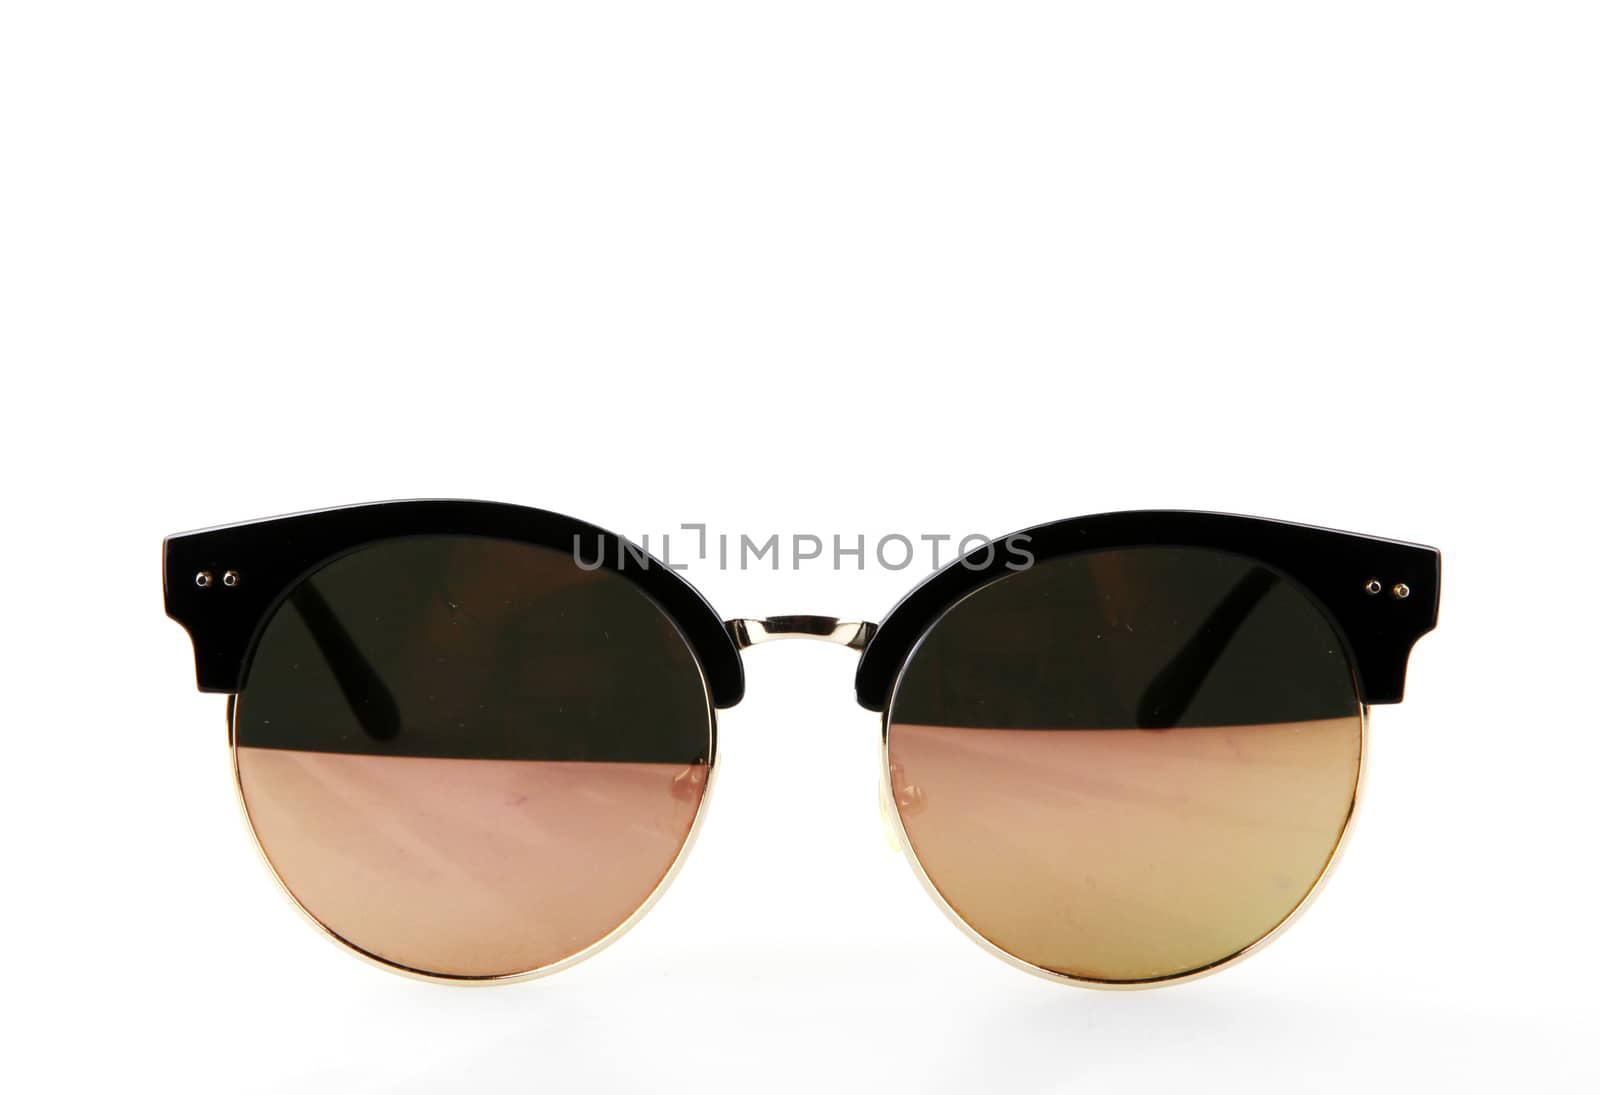 Stylish Sunglasses Against White Background by nenovbrothers